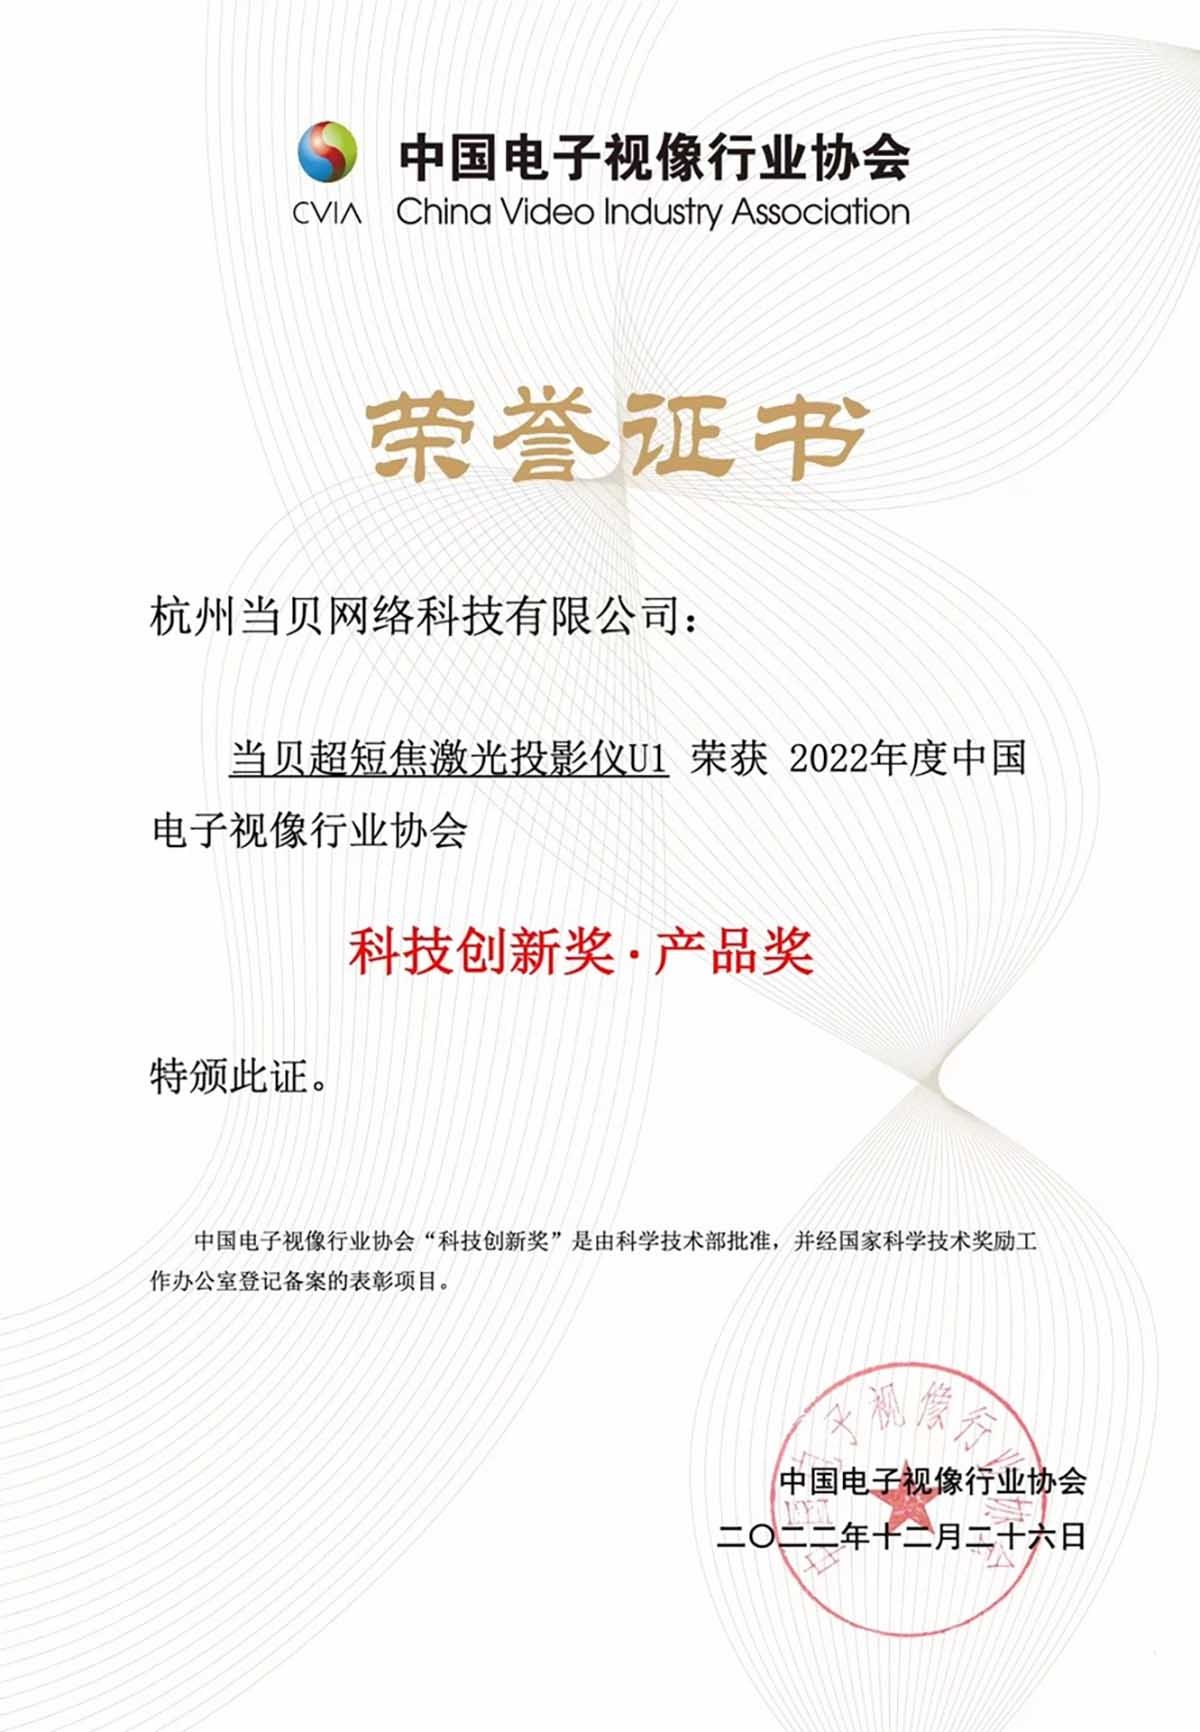 Dangbei U1 UST Laser projector Technology Innovation Award.jpg